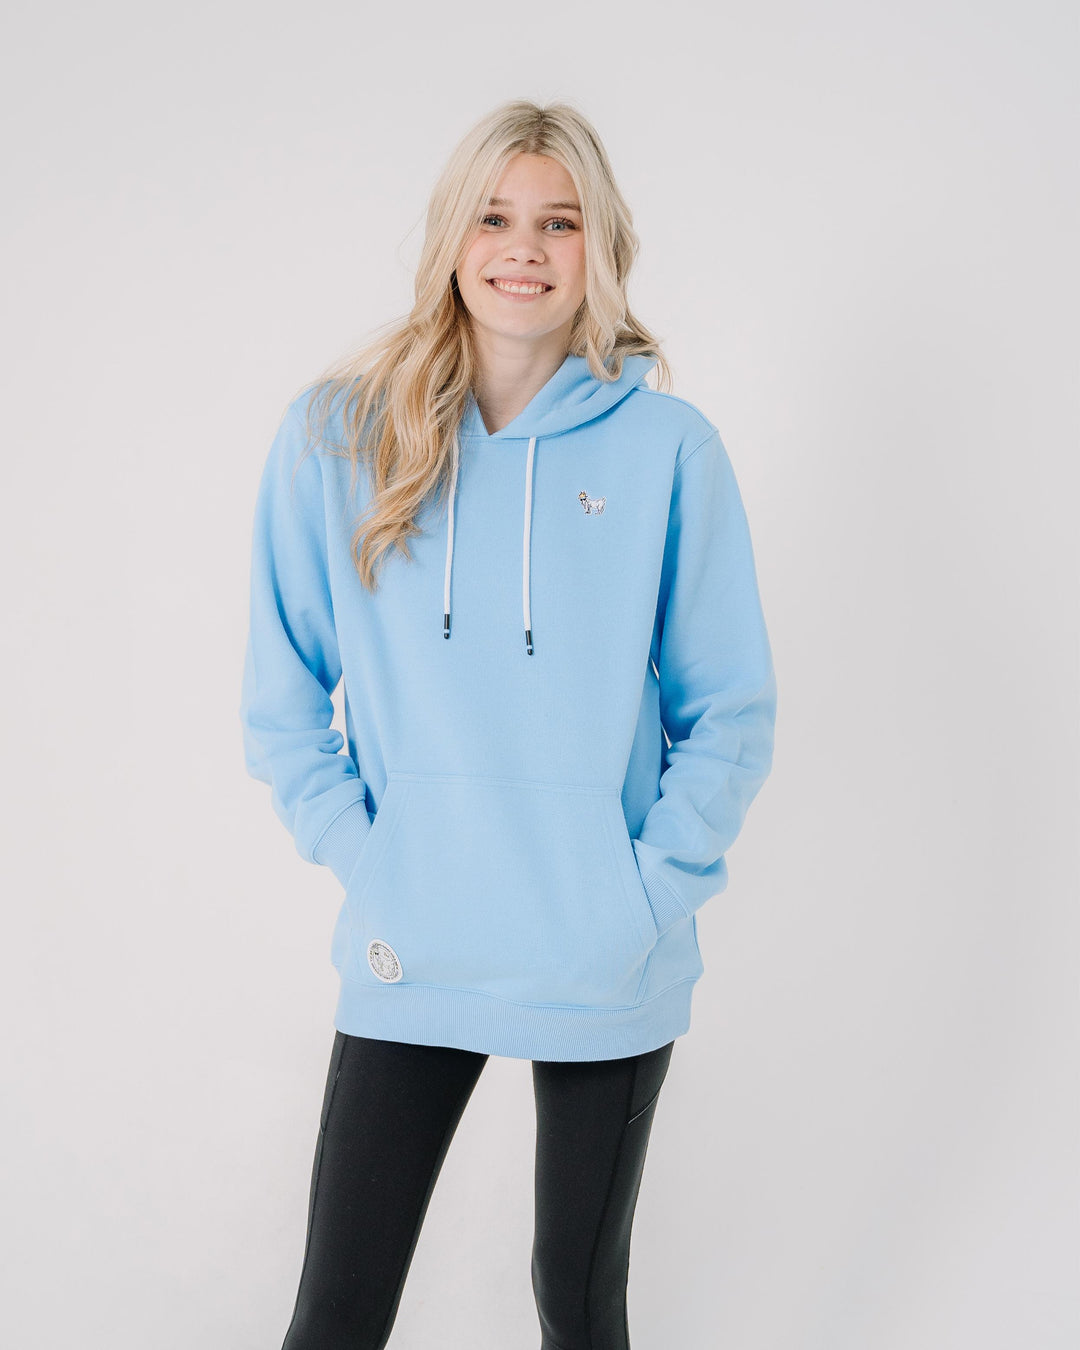 Girl wearing carolina blue sweatshirt with small goat embroidery#color_carolina-blue